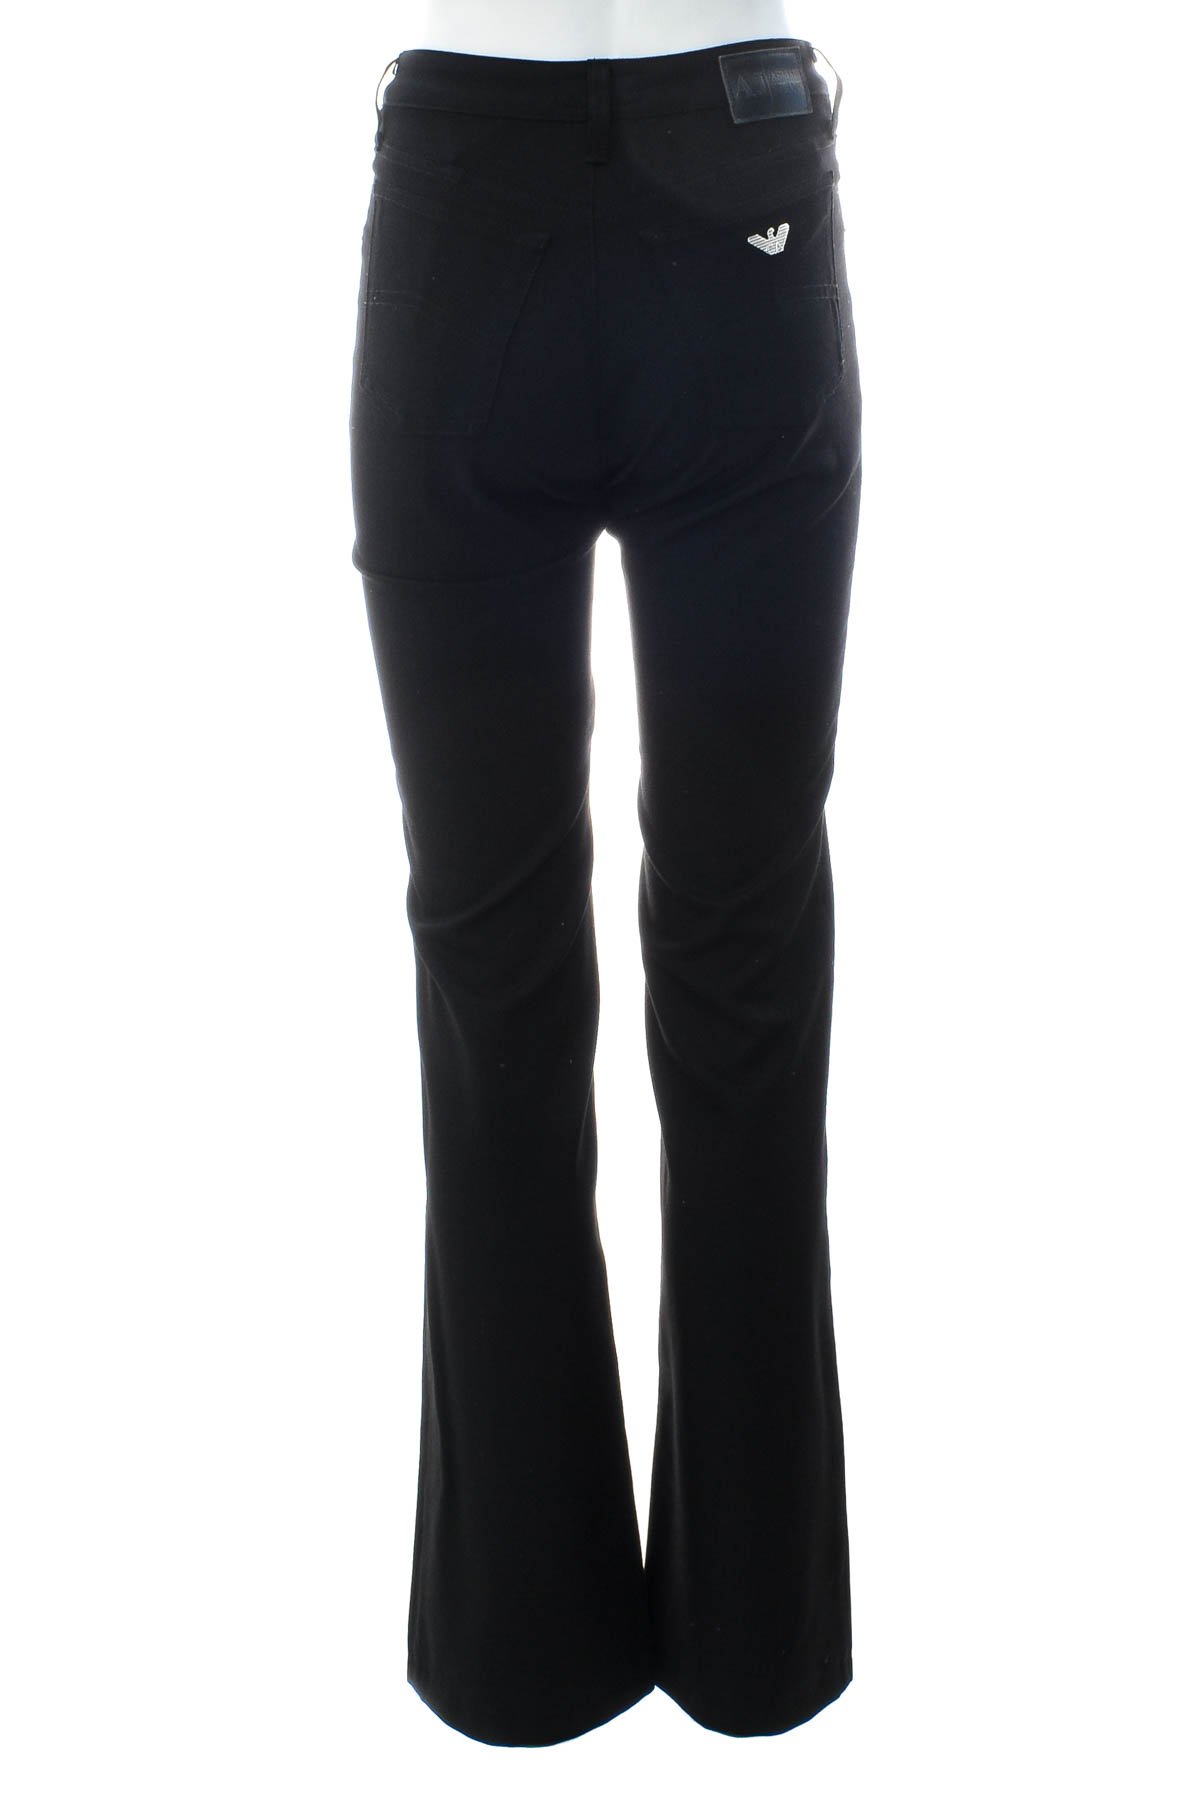 Women's trousers - Armani Jeans - 1